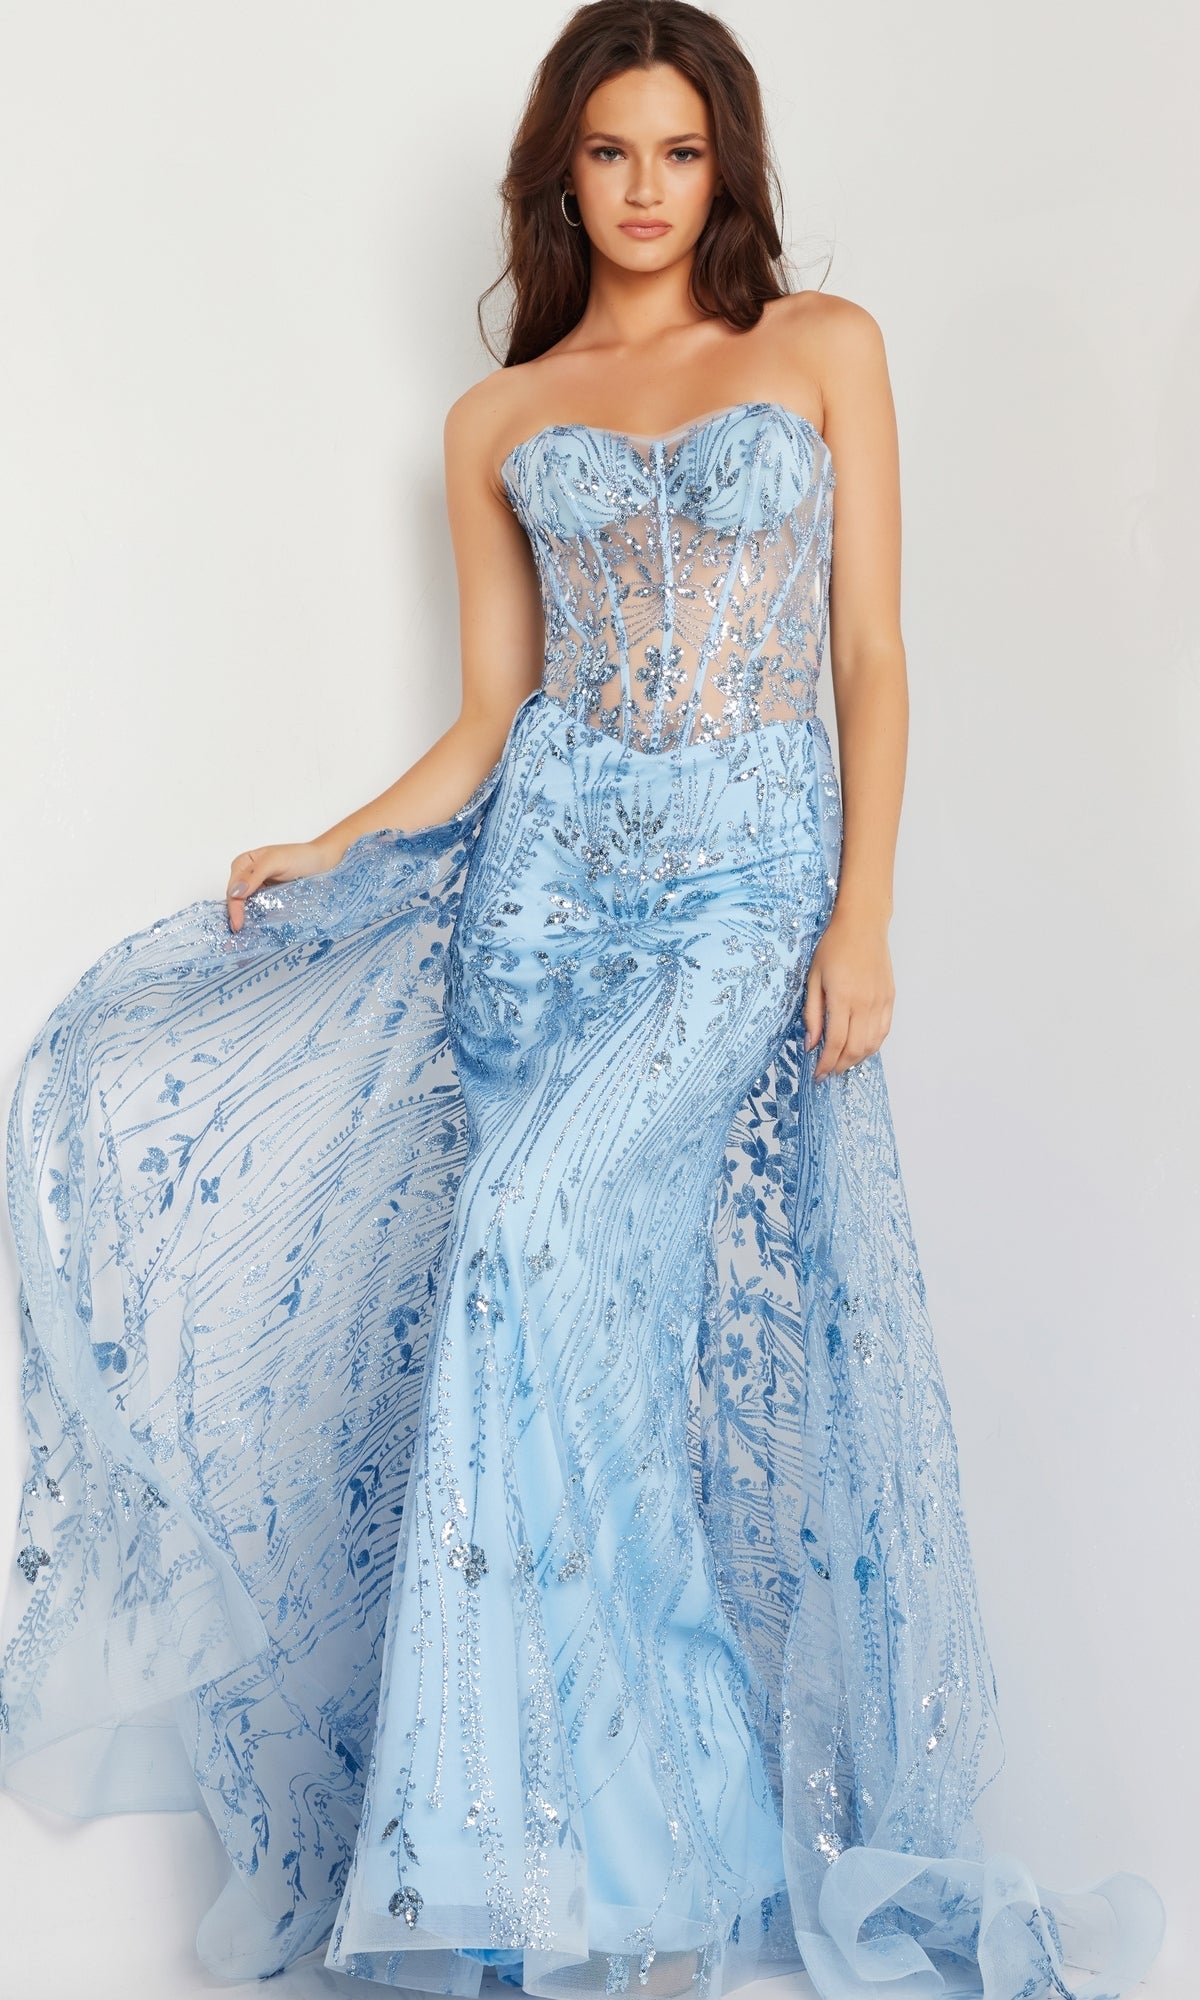  Formal Long Dress 26113 by Jovani